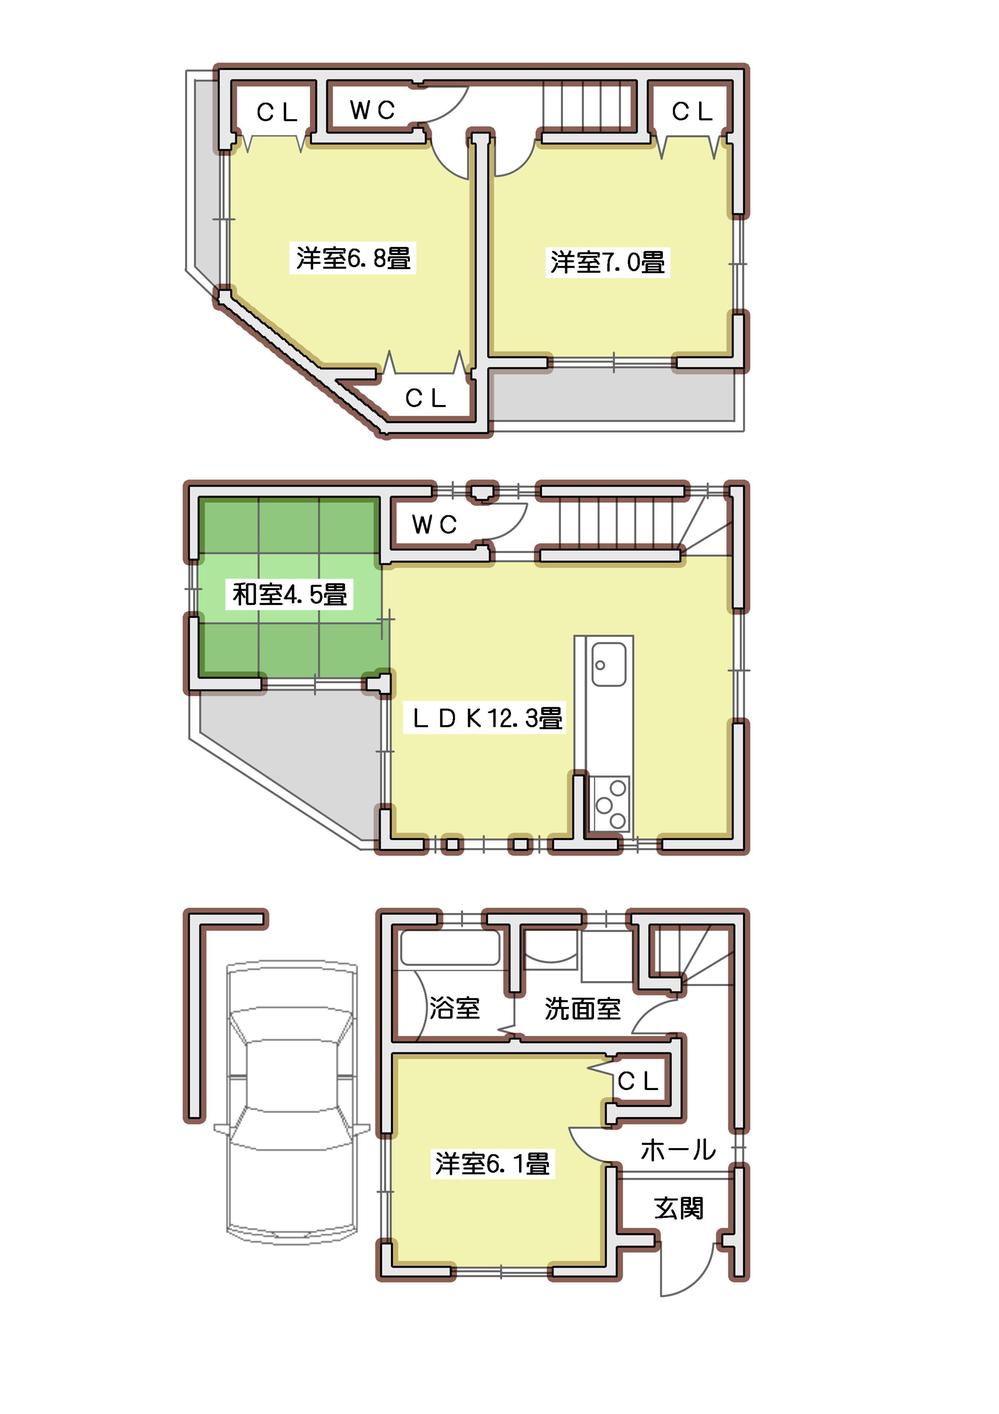 Floor plan. 26,800,000 yen, 4LDK, Land area 53.81 sq m , Building area 97.11 sq m